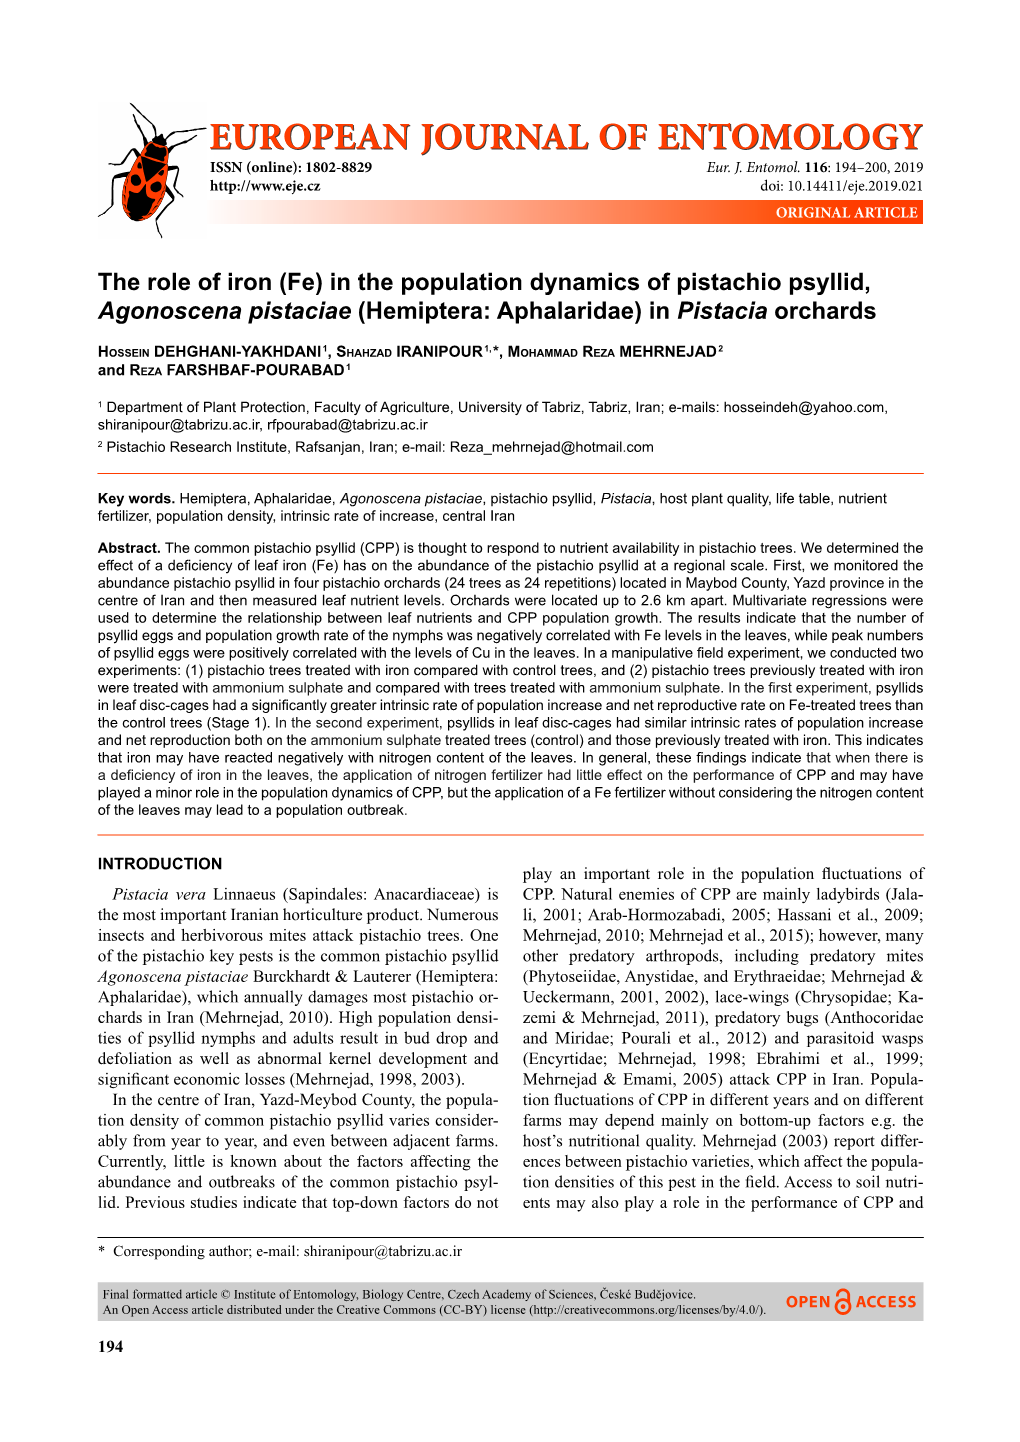 In the Population Dynamics of Pistachio Psyllid, Agonoscena Pistaciae (Hemiptera: Aphalaridae) in Pistacia Orchards